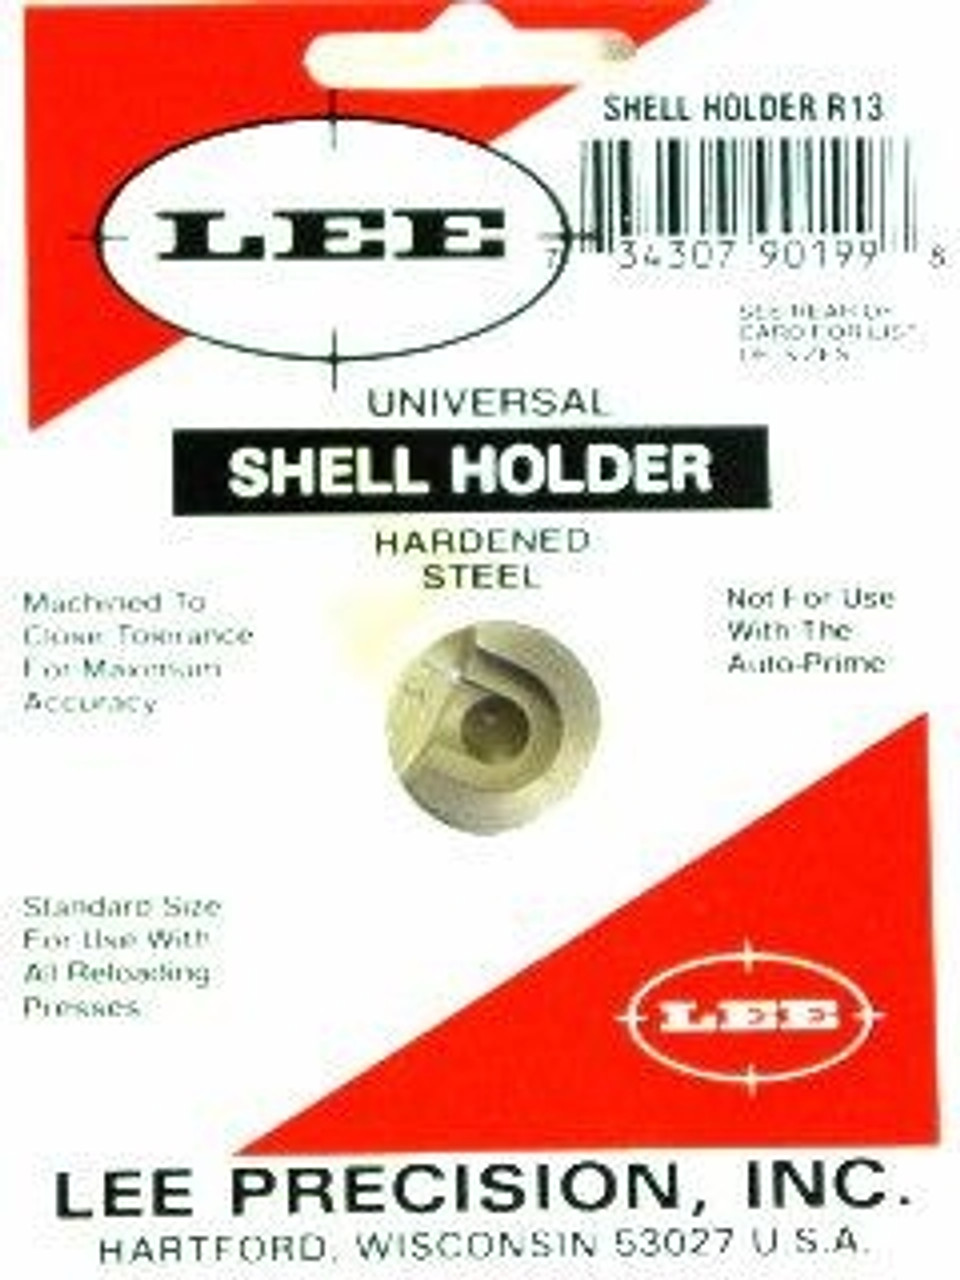 Lee Precision #13 Universal Shell Holder Steel